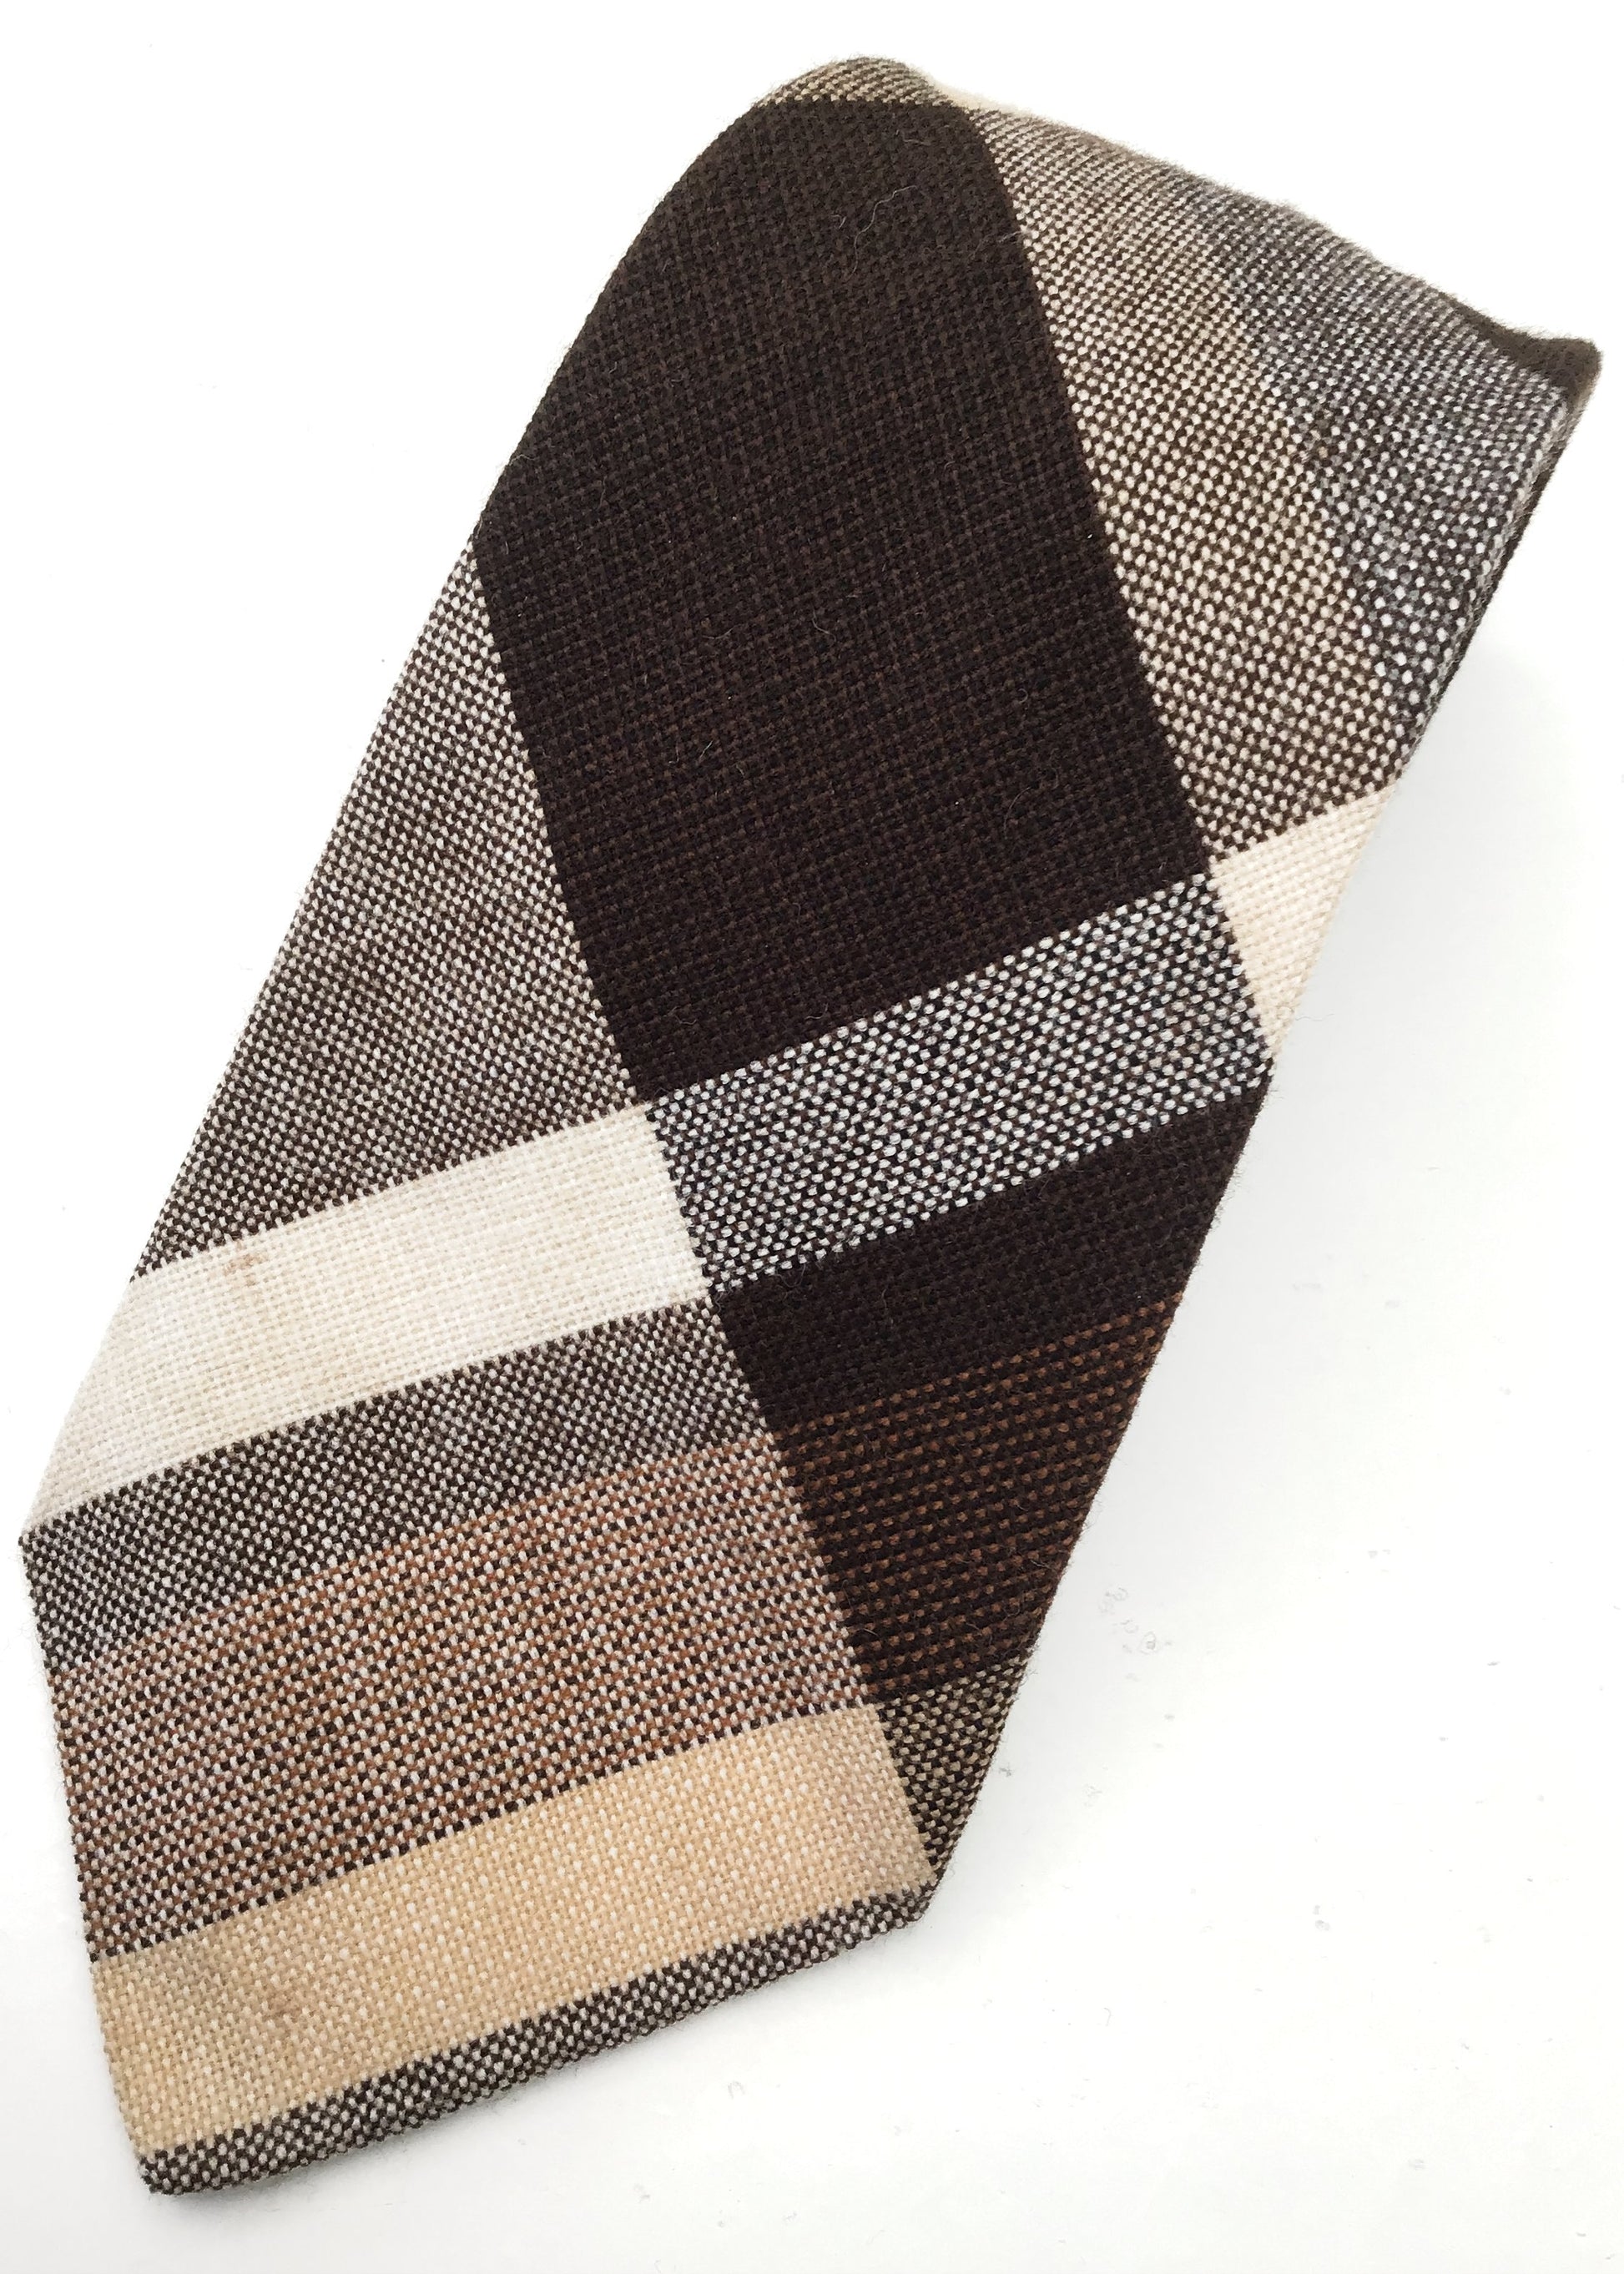 vintage 70s brown tweed texture plaid fashion tie